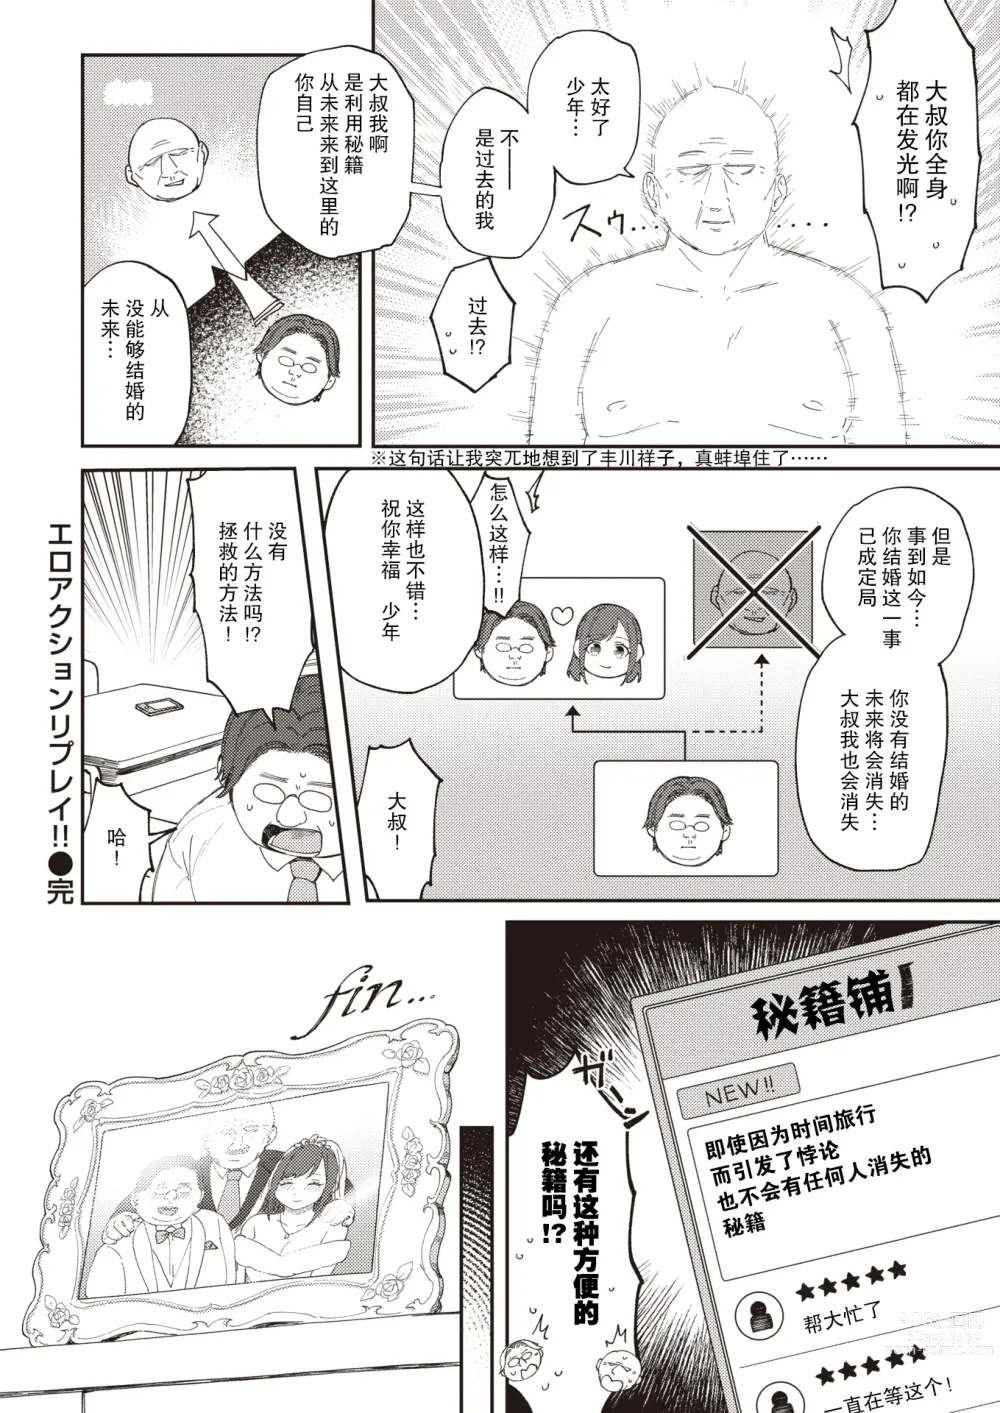 Page 21 of manga ERO ACTION REPLAY!!